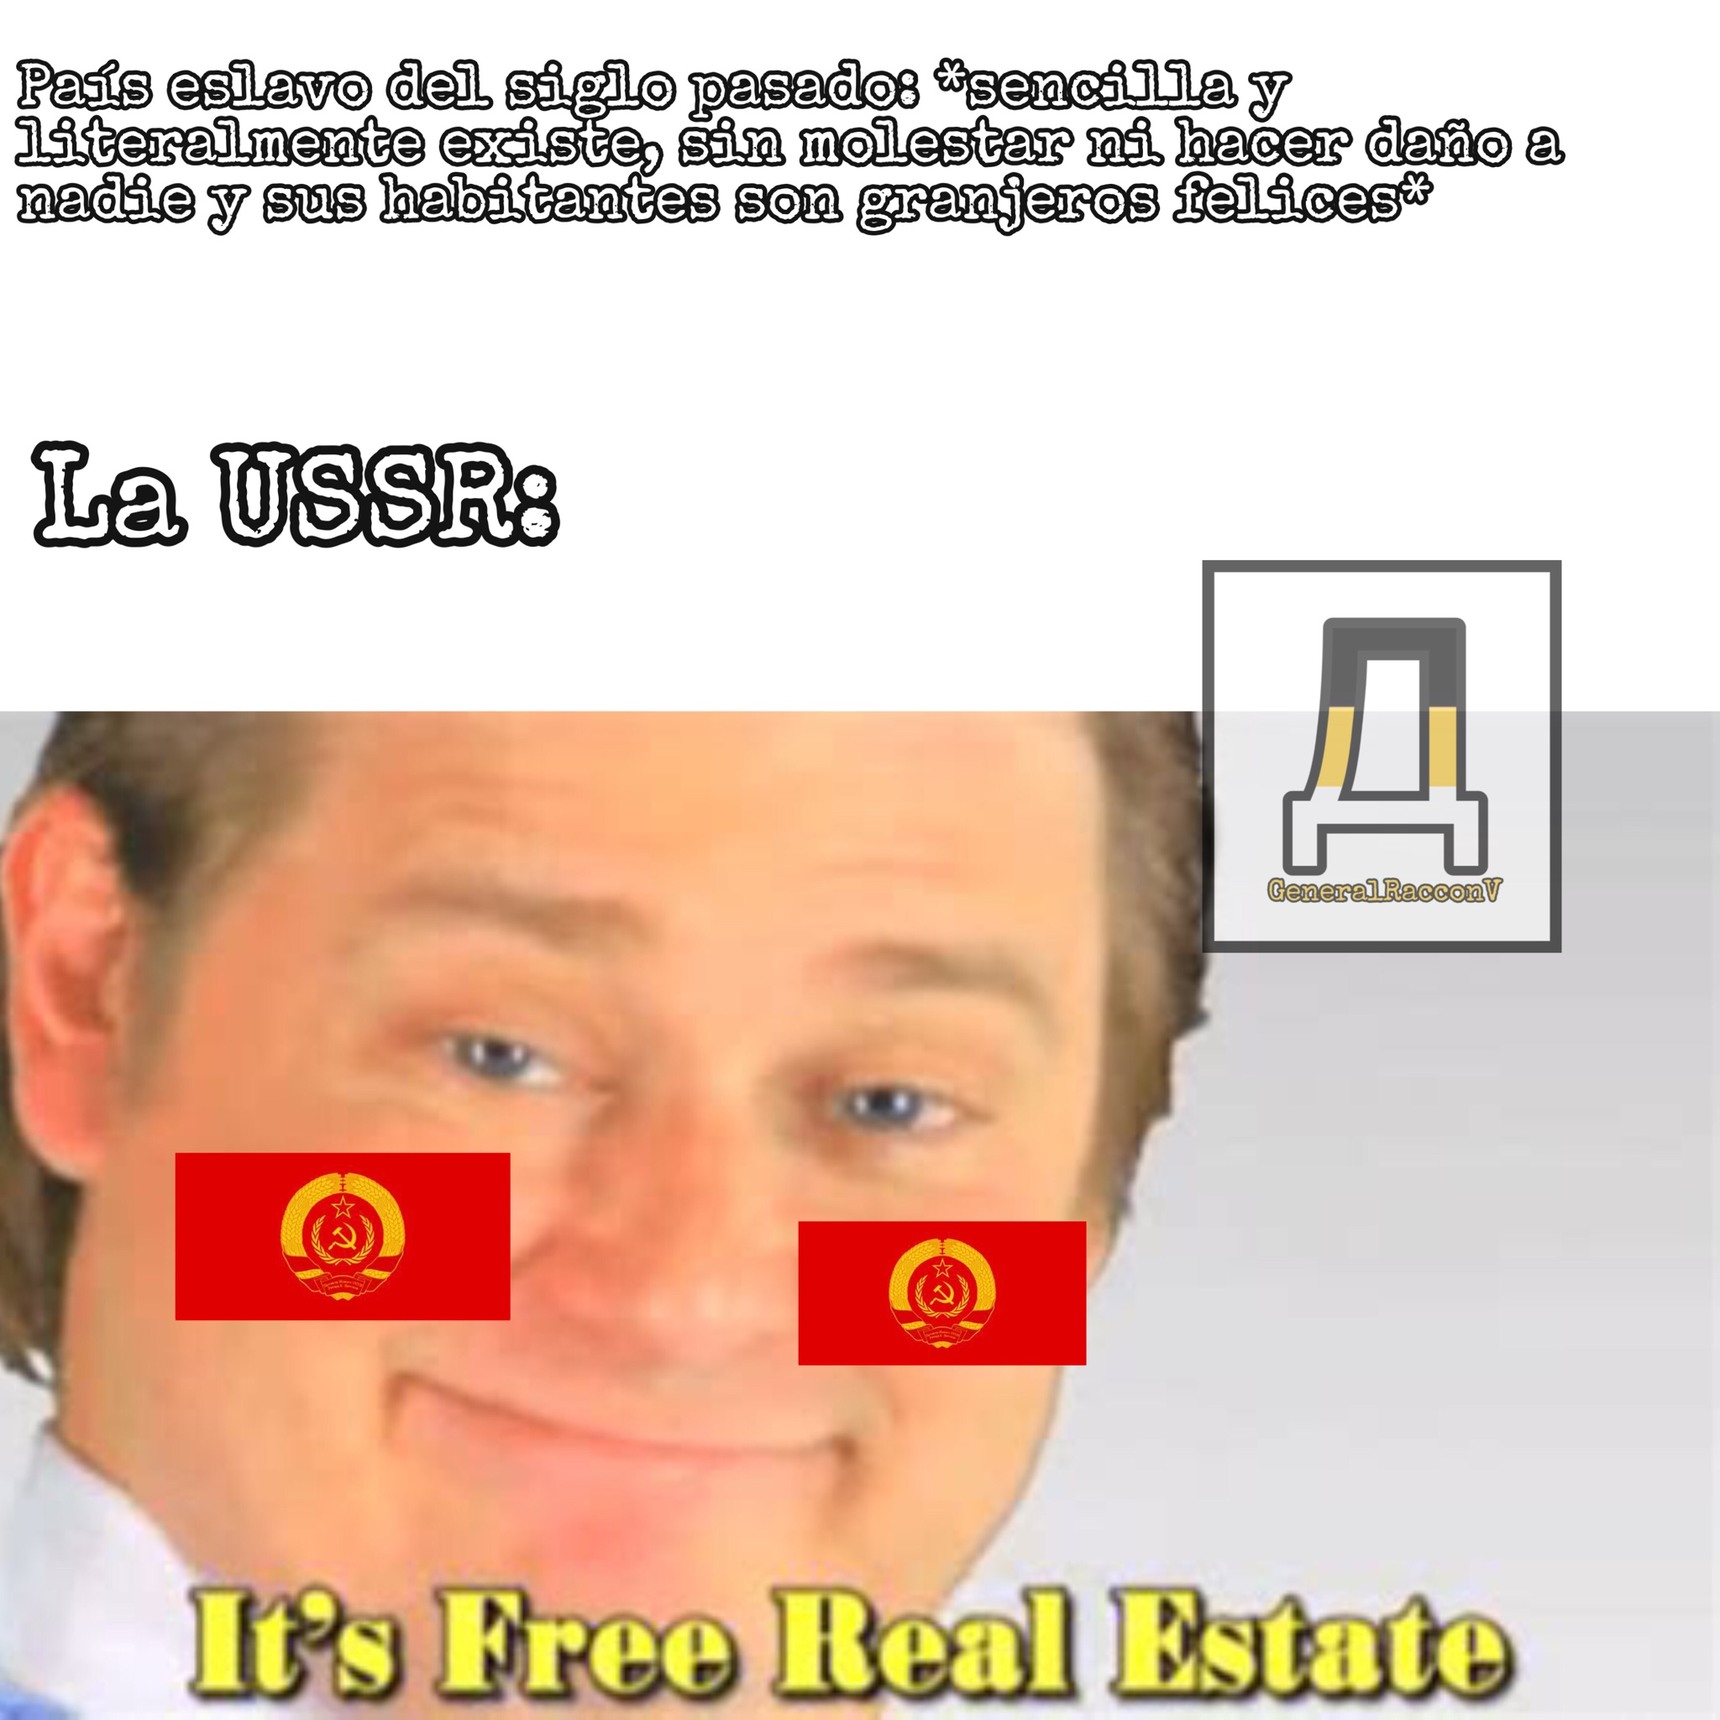 Los ctm de la USSR - meme